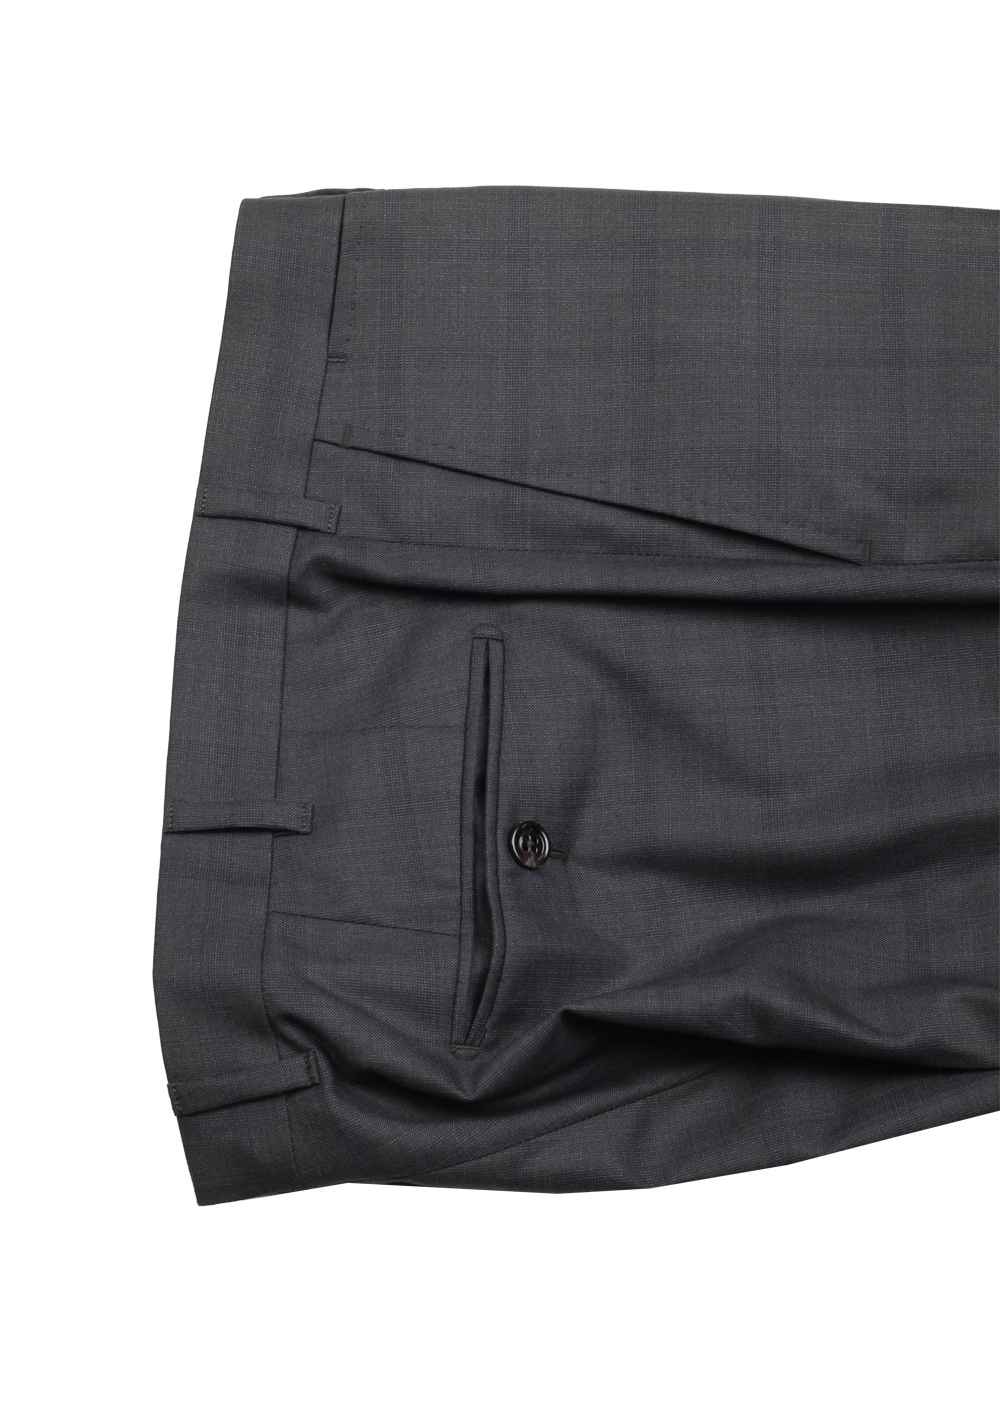 Ermenegildo Zegna Premium Couture Gray Checked Suit | Costume Limité